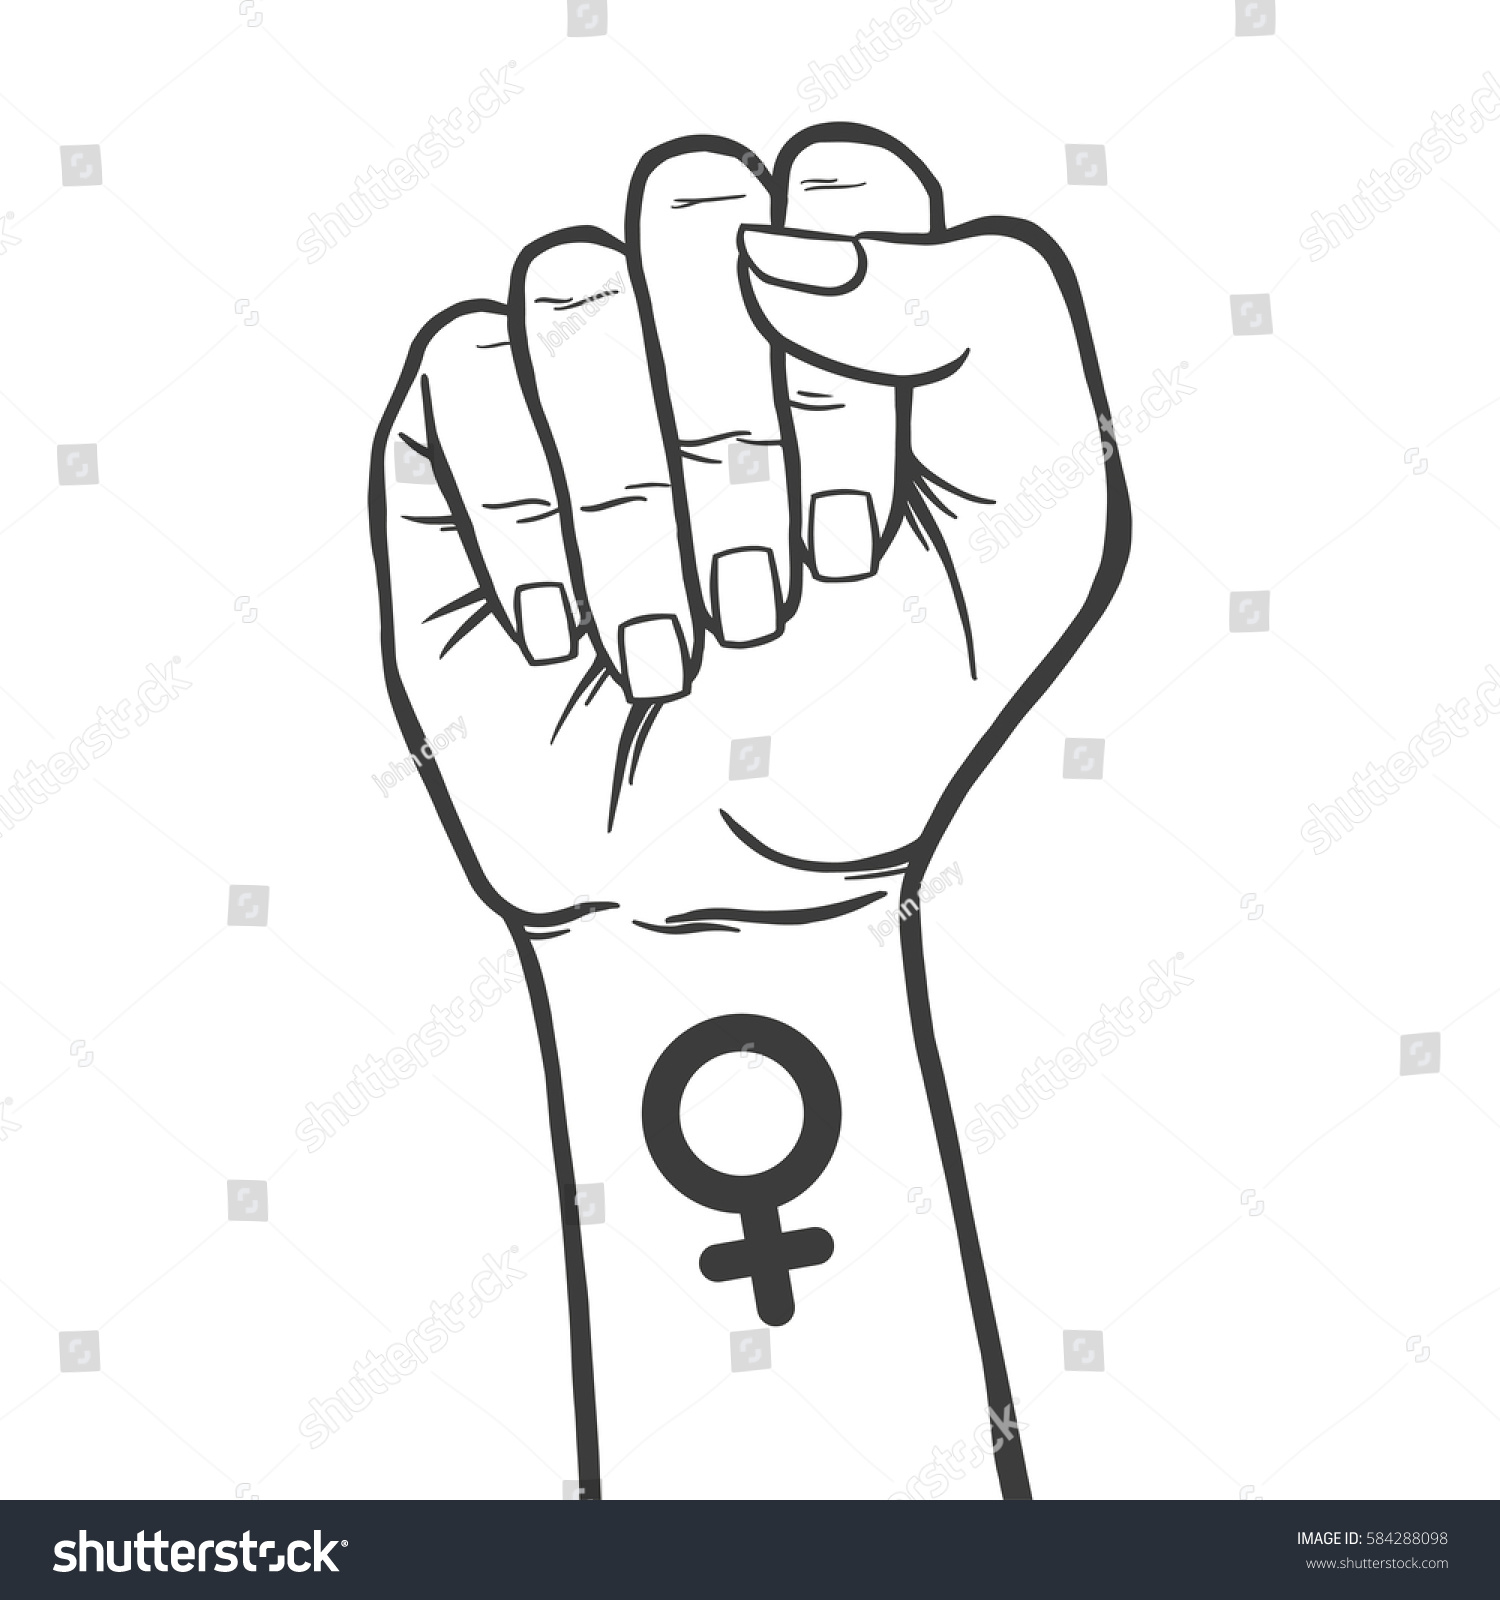 Download Symbol Feminist Movement Woman Hand Her Stock Vector 584288098 - Shutterstock